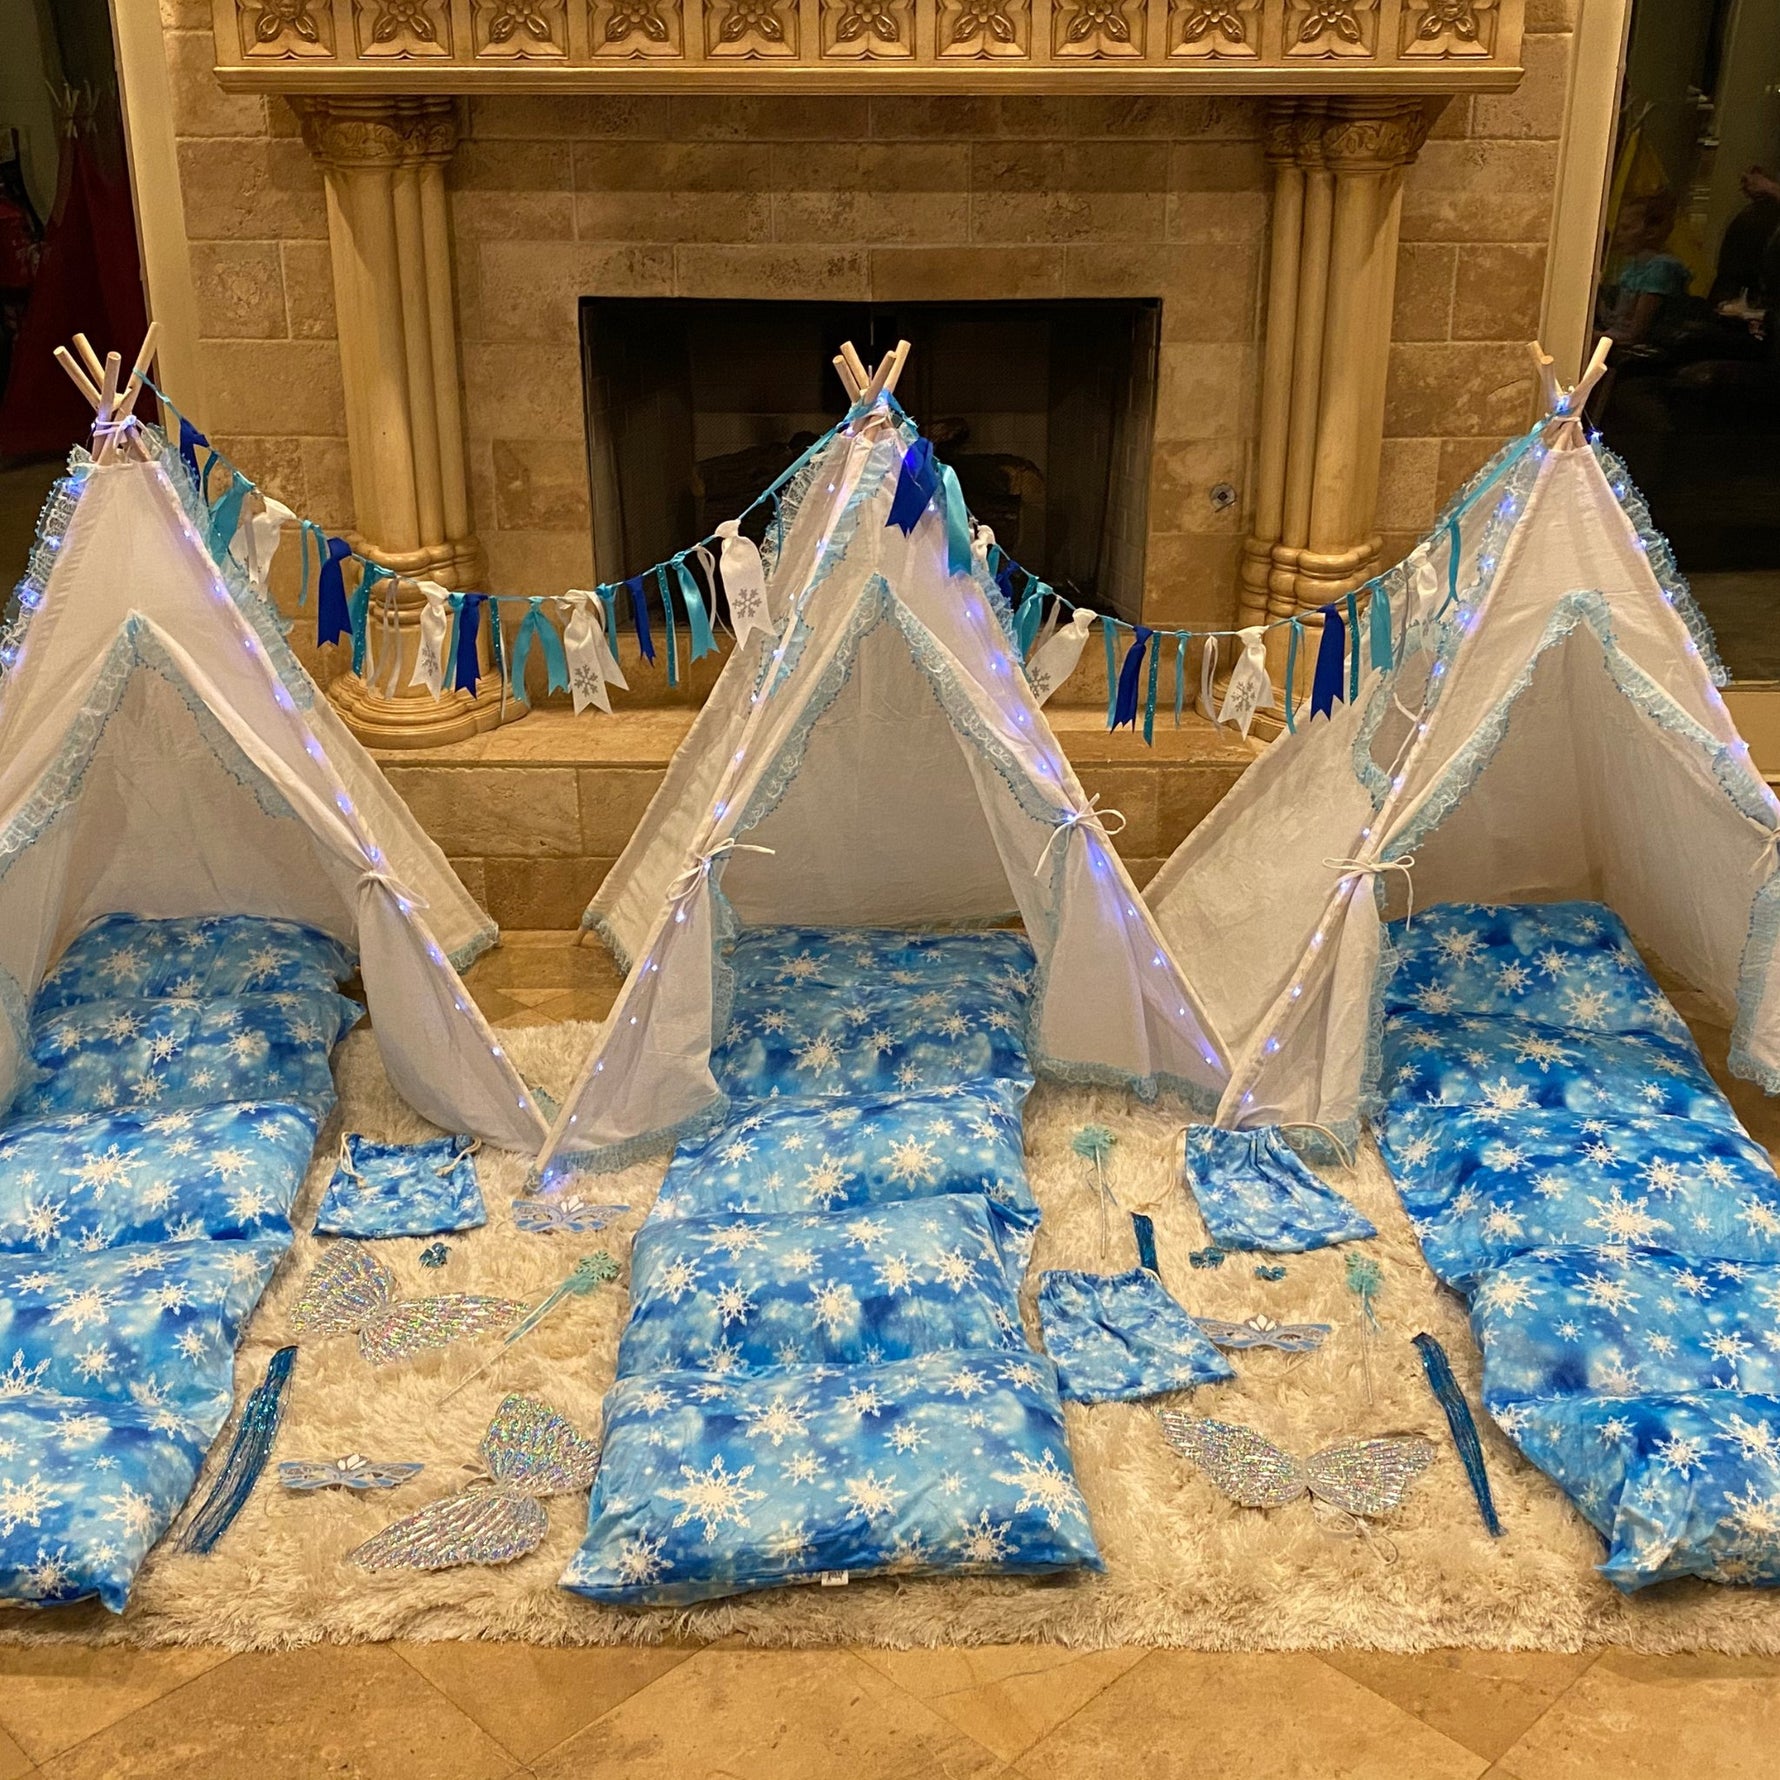 Snowflake Princess Teepee Tent Party Supplies Kit